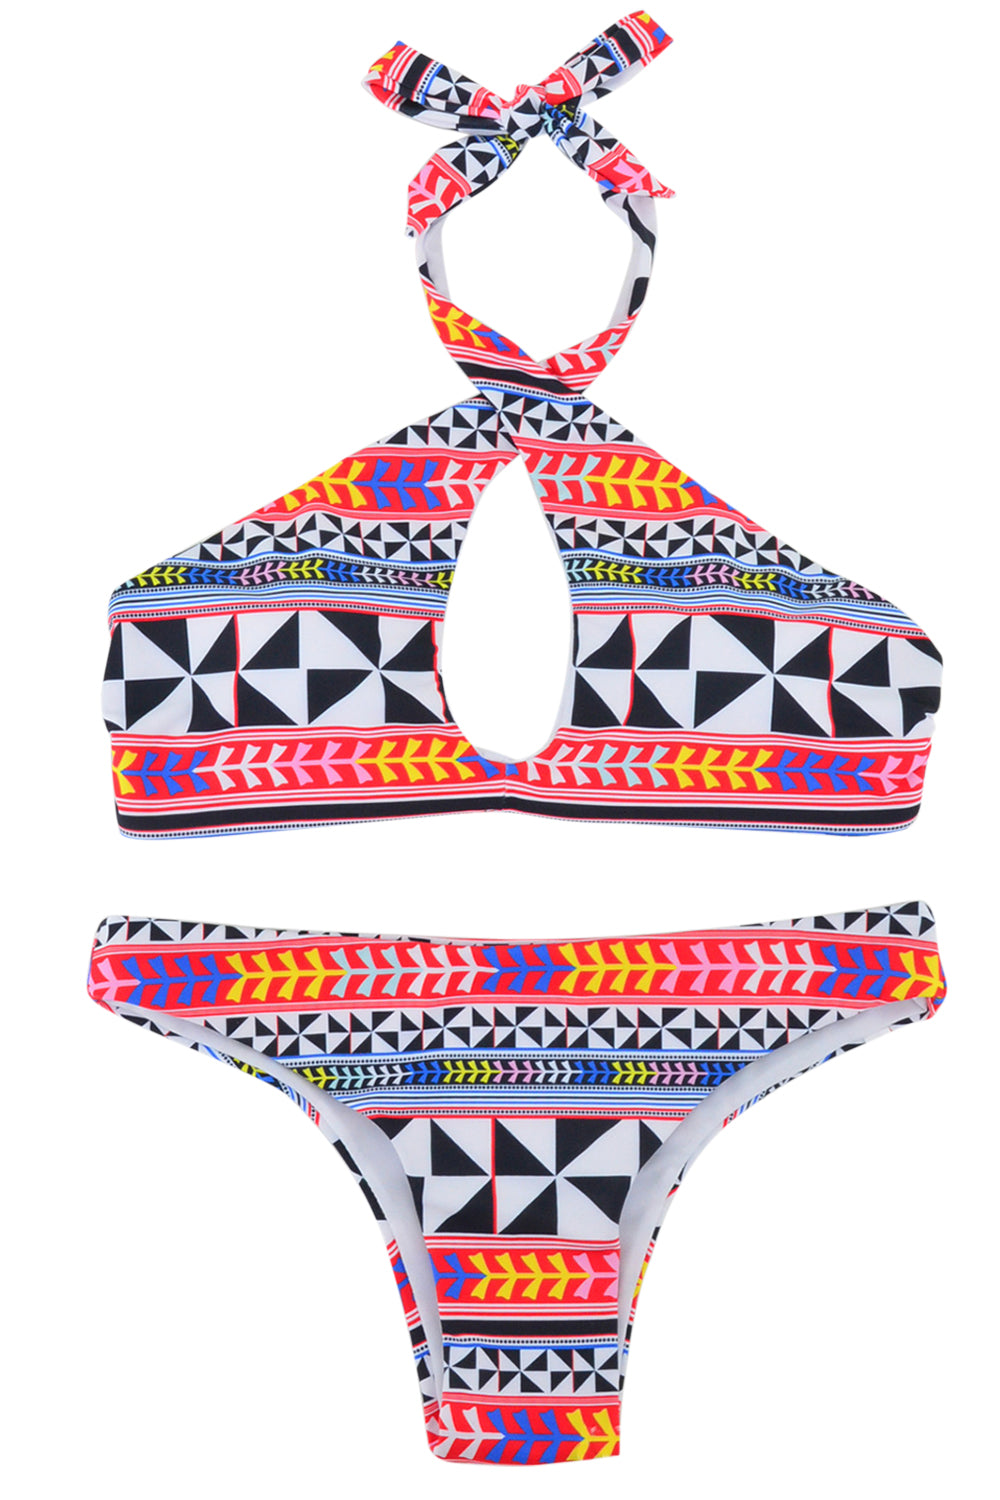 Iyasson Geometric Pattern Cross Front Halter Bikini Sets